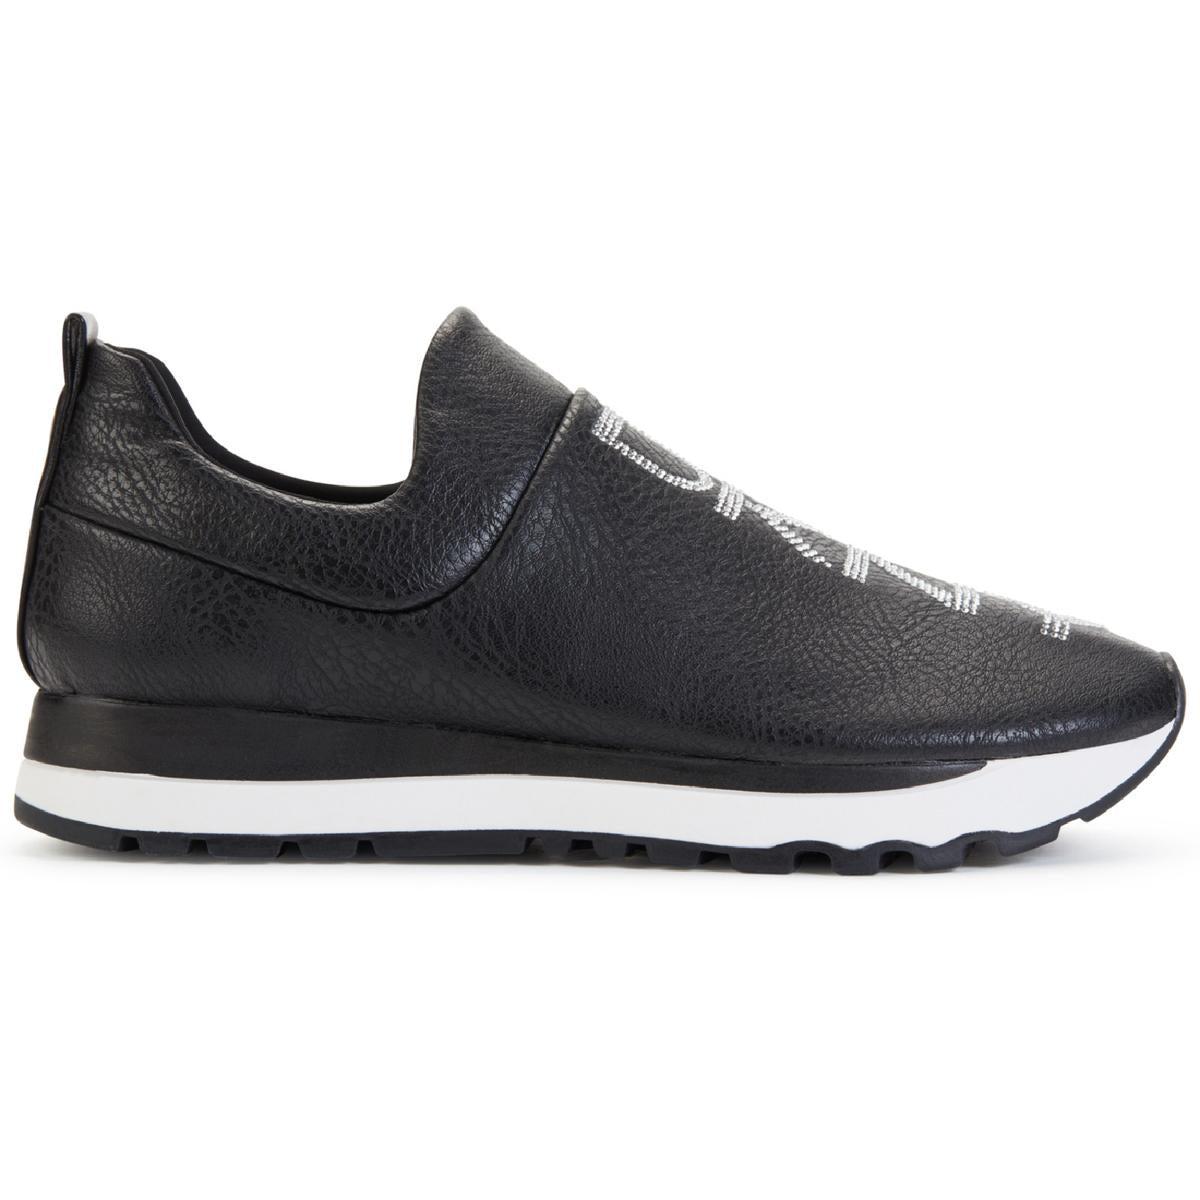 DKNY Jadyn Faux Leather Lifestyle Slip-on Sneakers in Black | Lyst